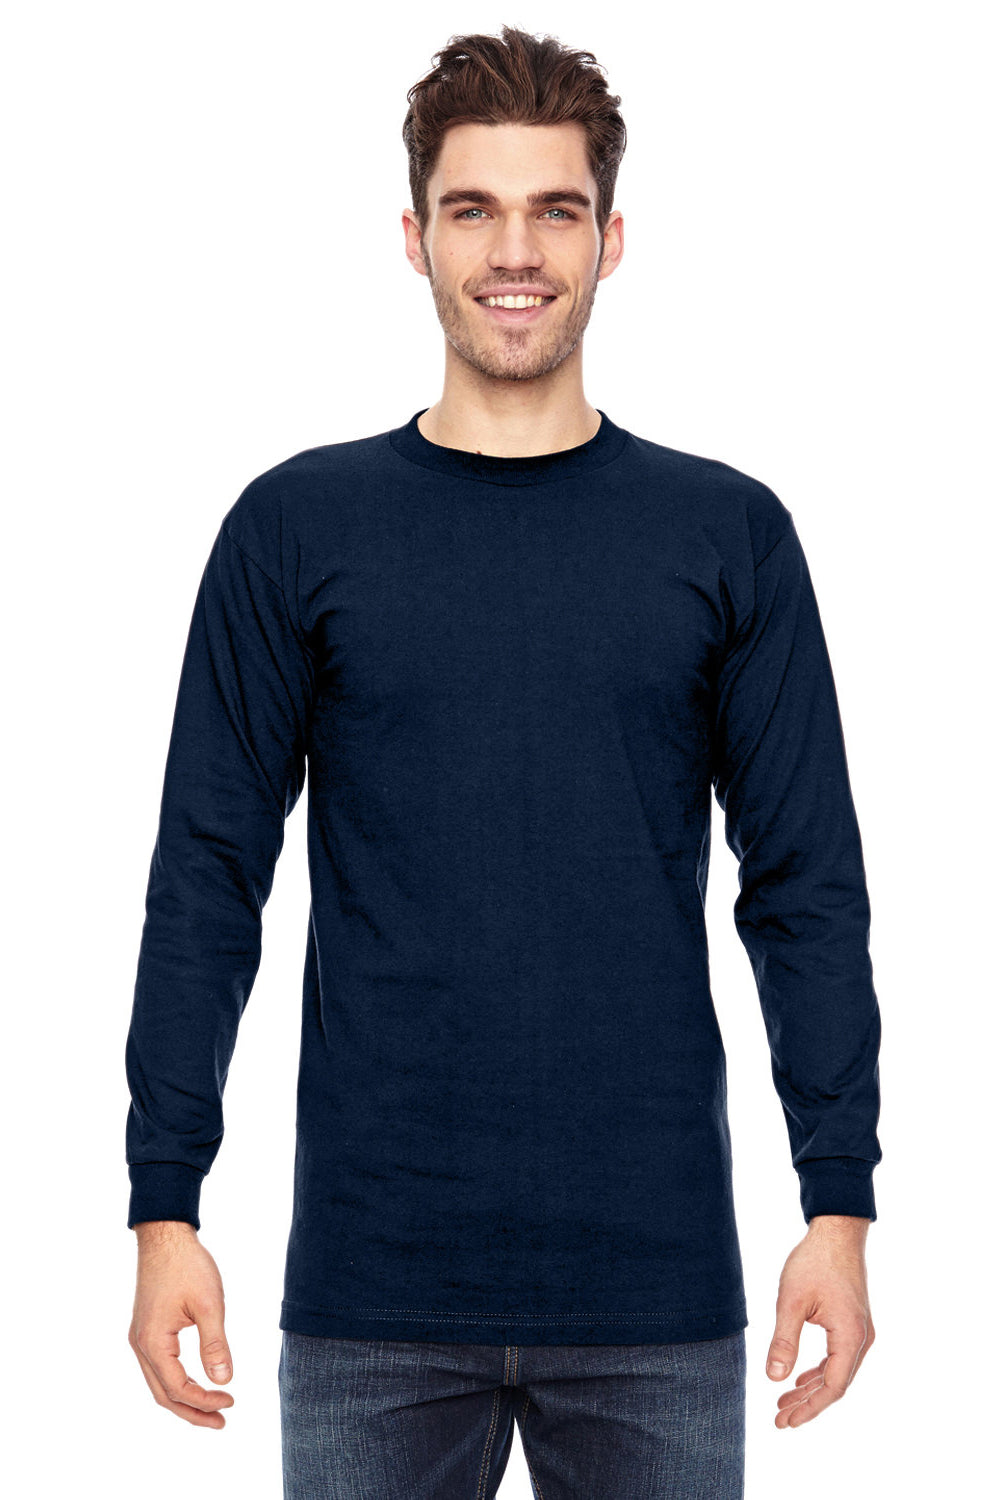 Bayside BA6100 Mens USA Made Long Sleeve Crewneck T-Shirt Navy Blue Model Front